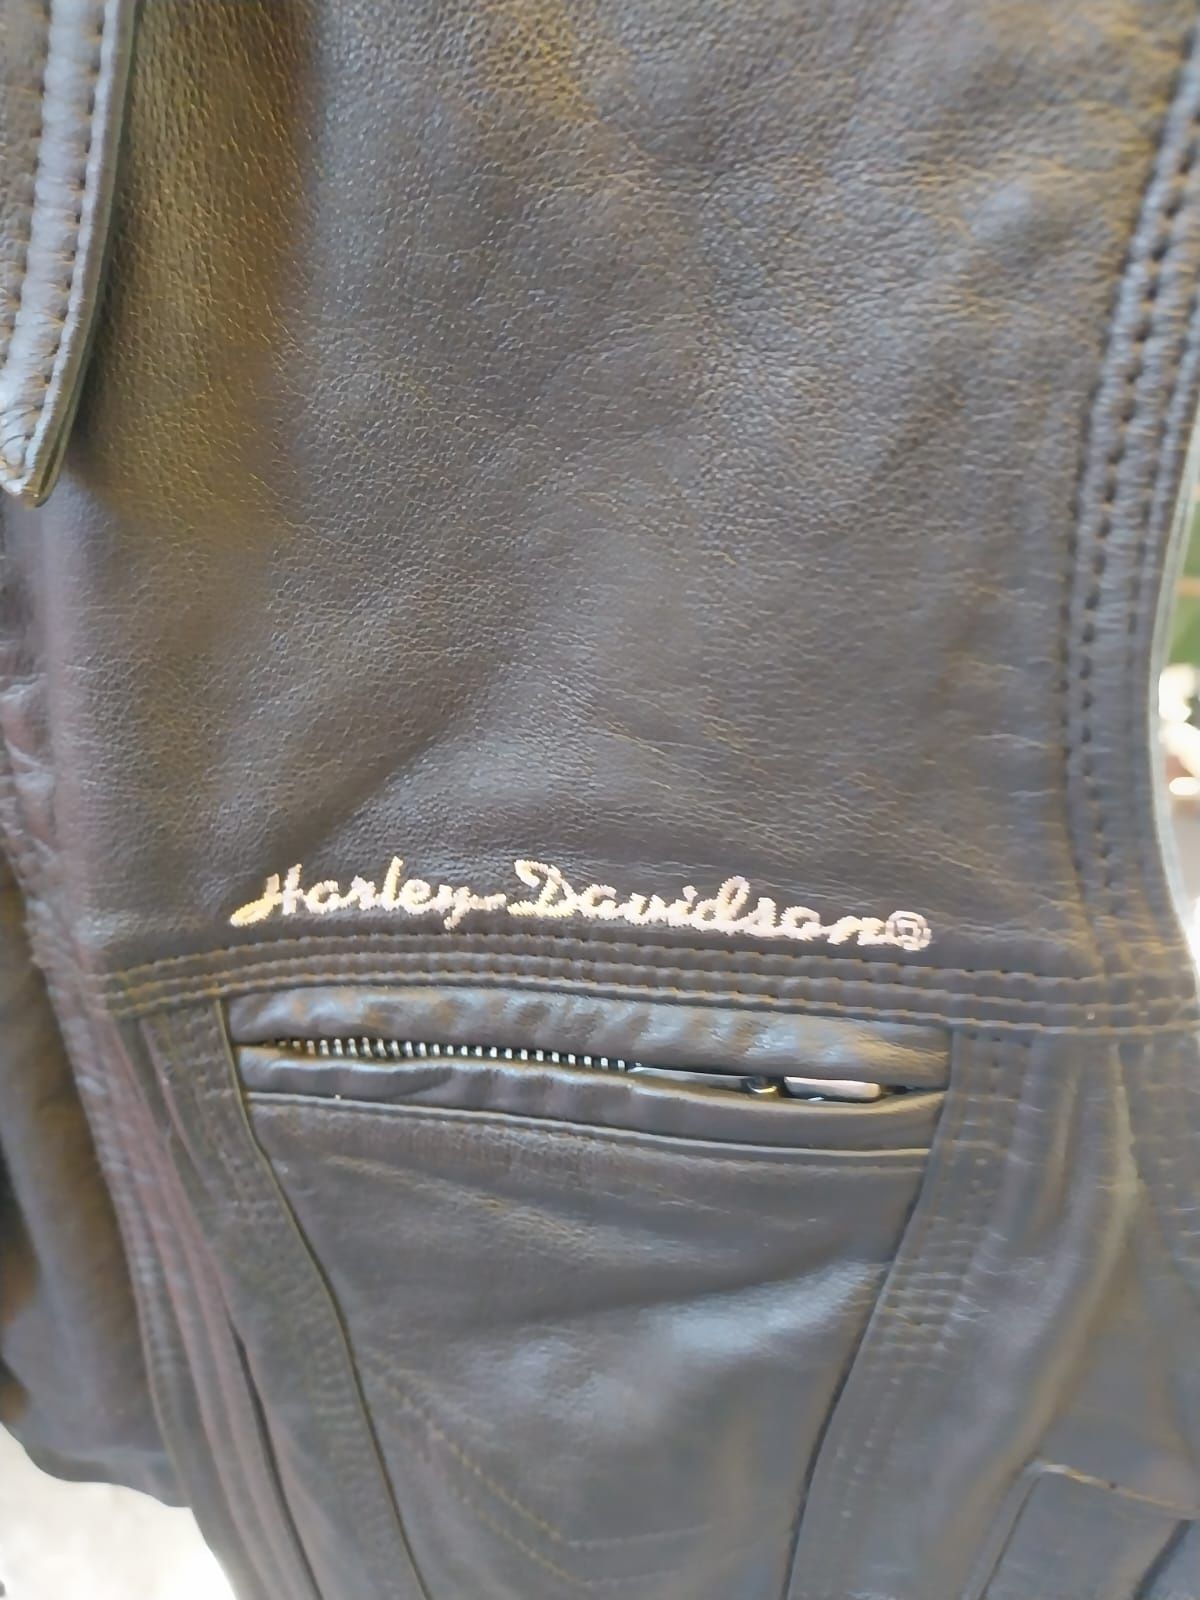 Harley Davidson kamizelka S